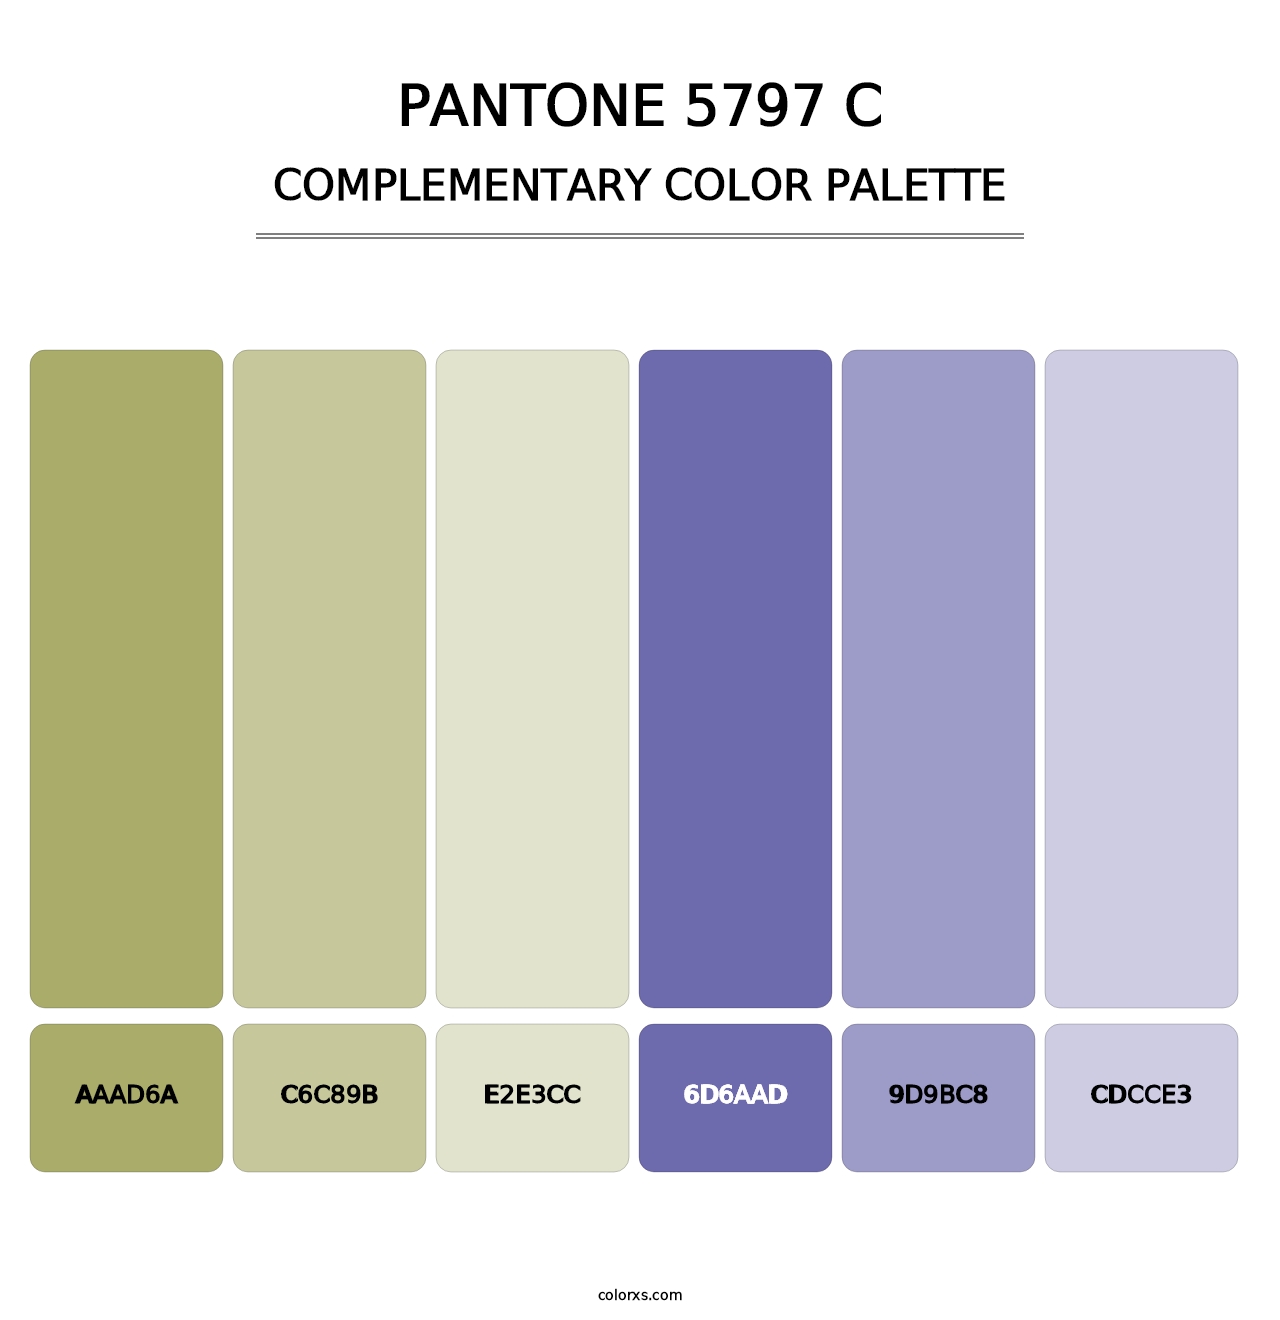 PANTONE 5797 C - Complementary Color Palette